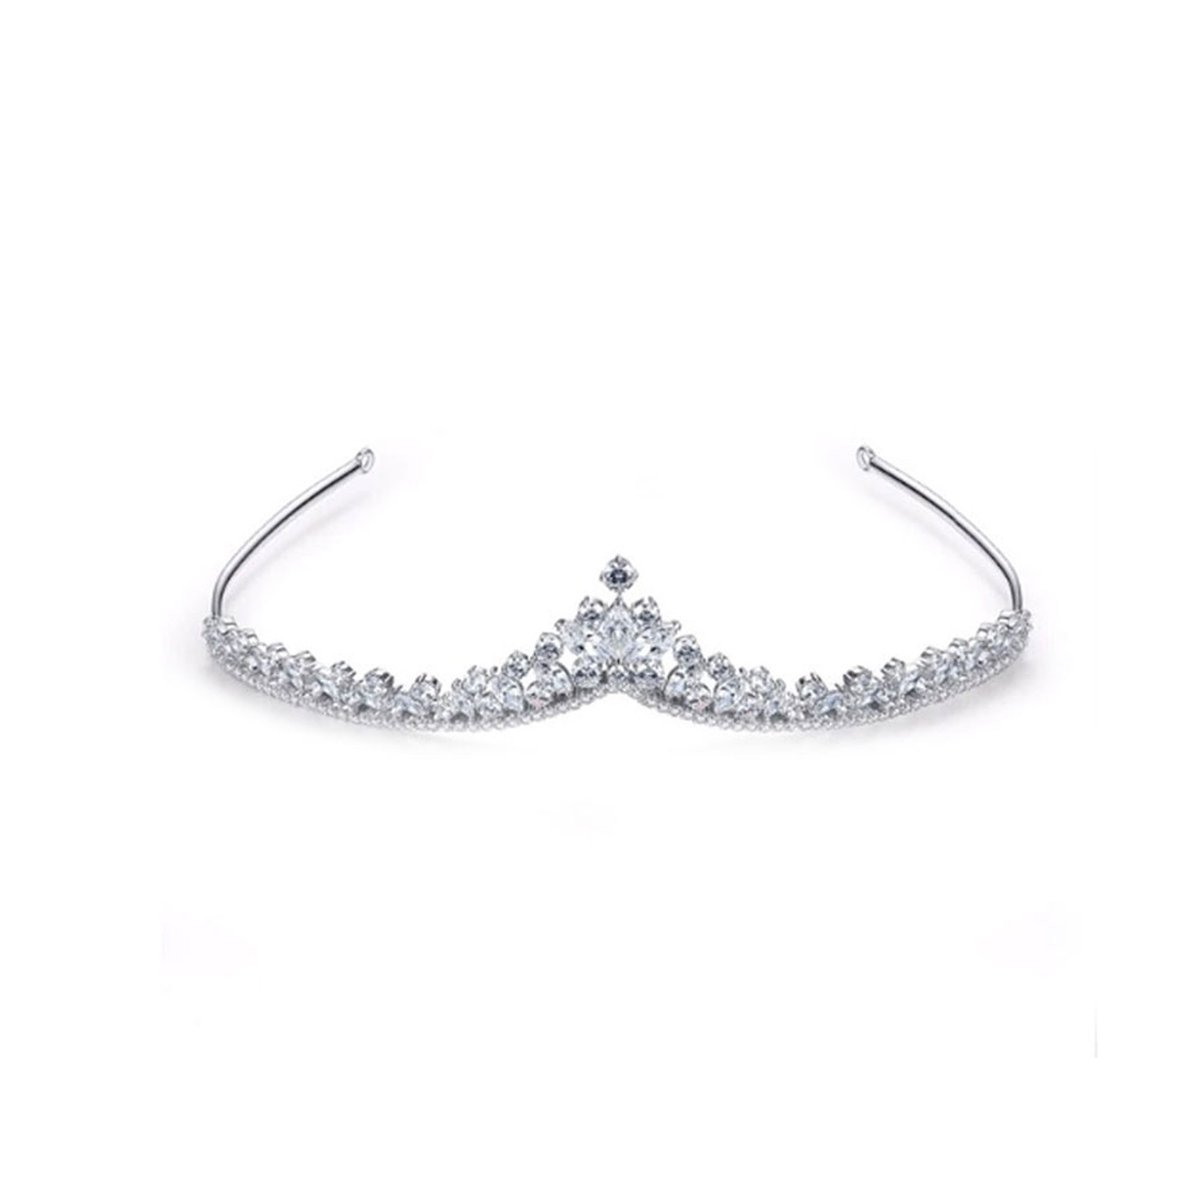 Silver Crystal Embellished Wishbone Bridal Tiara | Elle #hochzeittiara #2022bride
Buy here tiarasandco.co.uk/product-page/e…